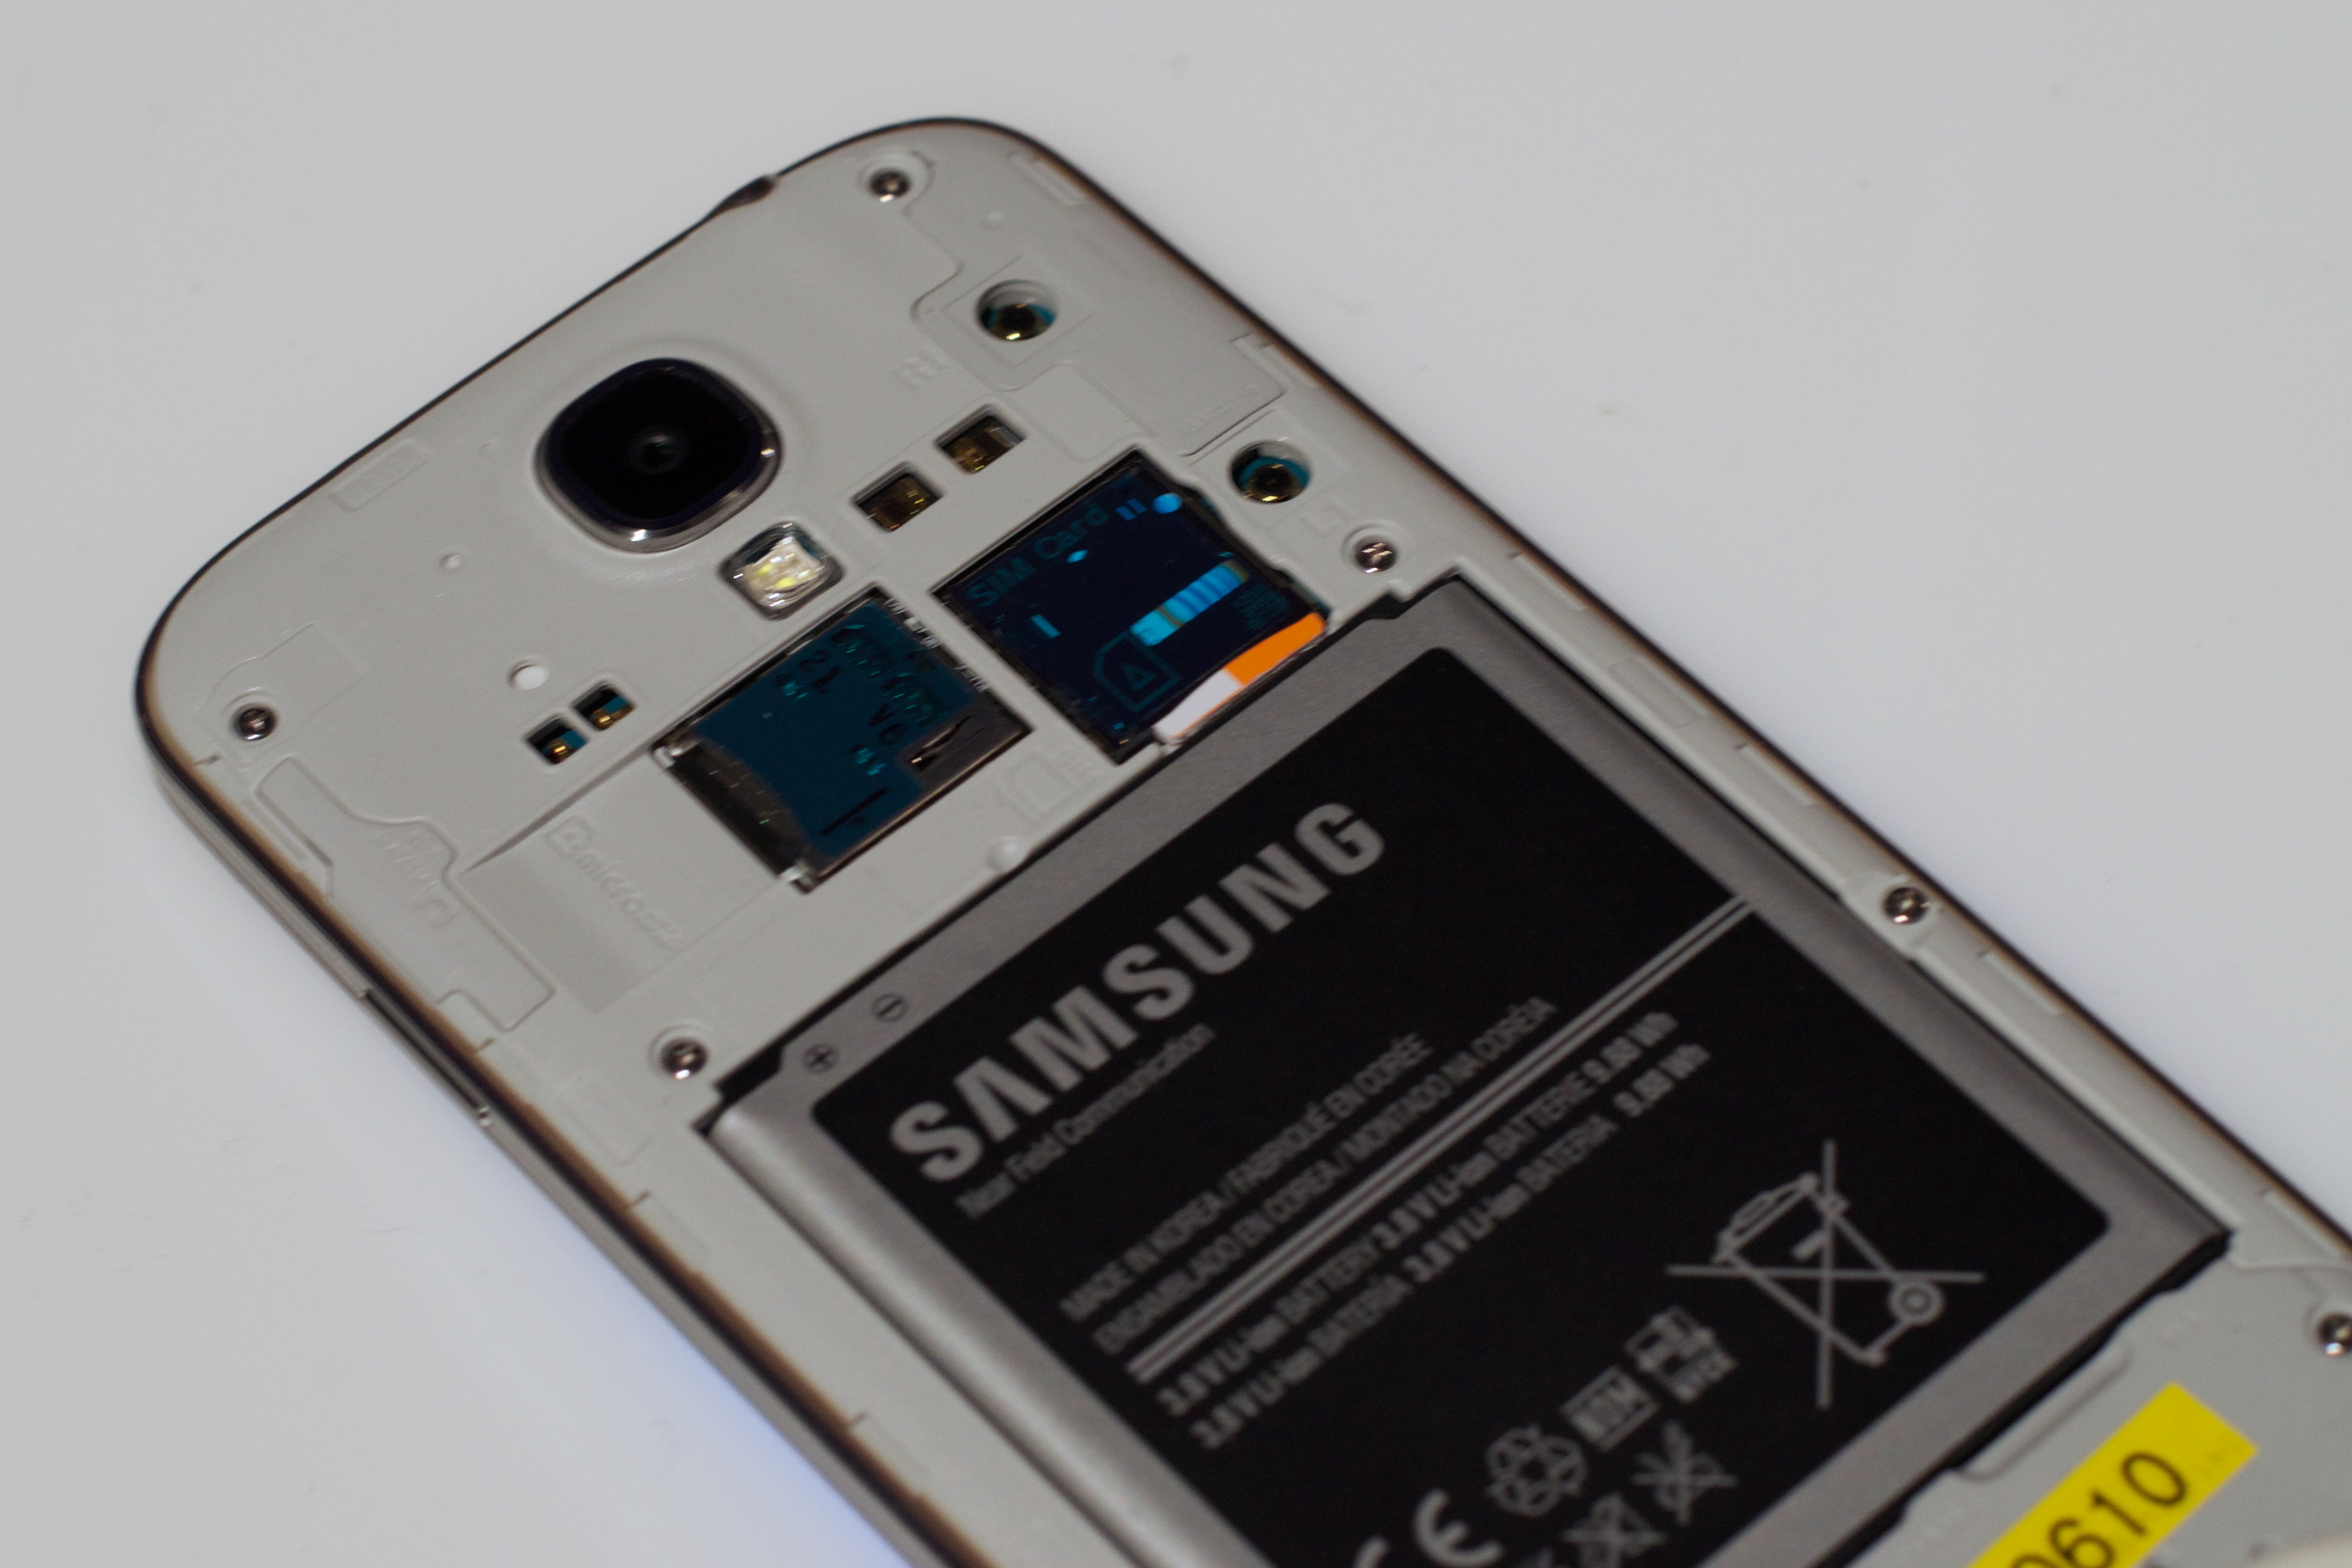 Samsung-Galaxy-S4-Hands-On-3.jpg